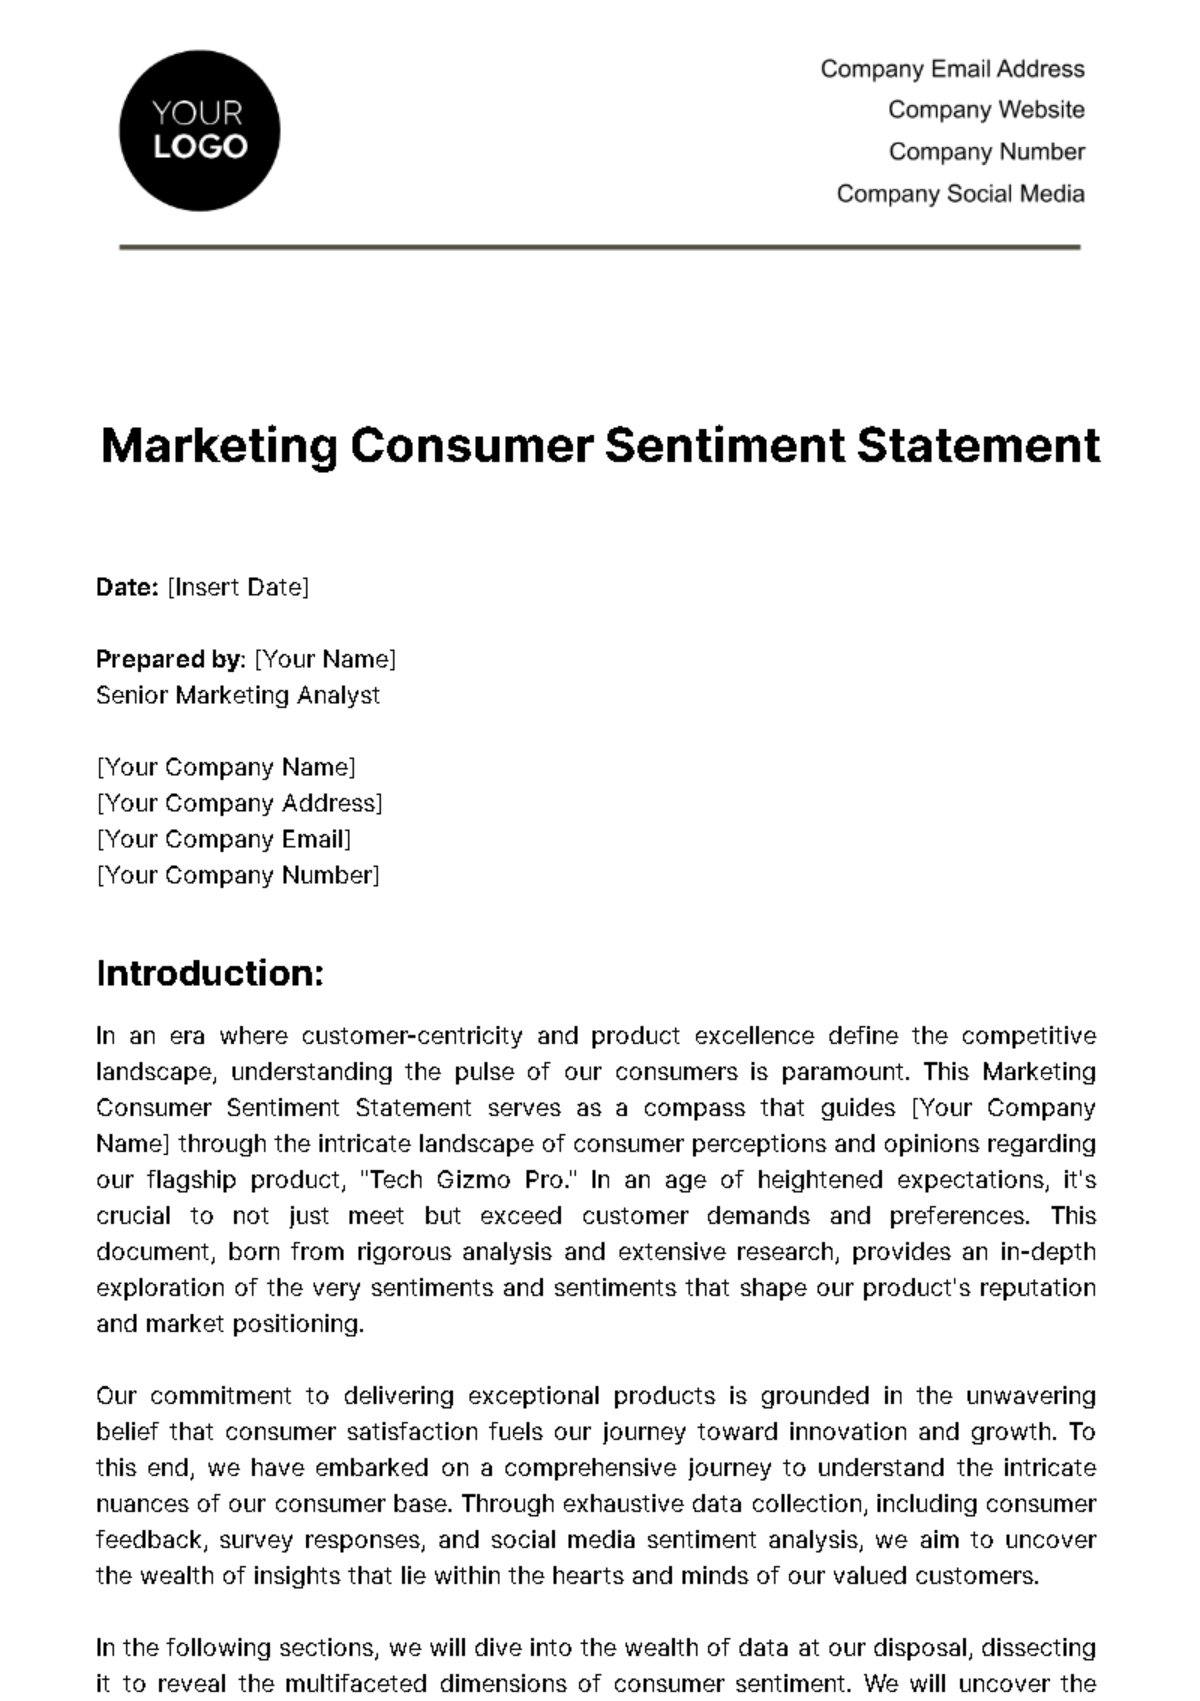 Free Marketing Consumer Sentiment Statement Template